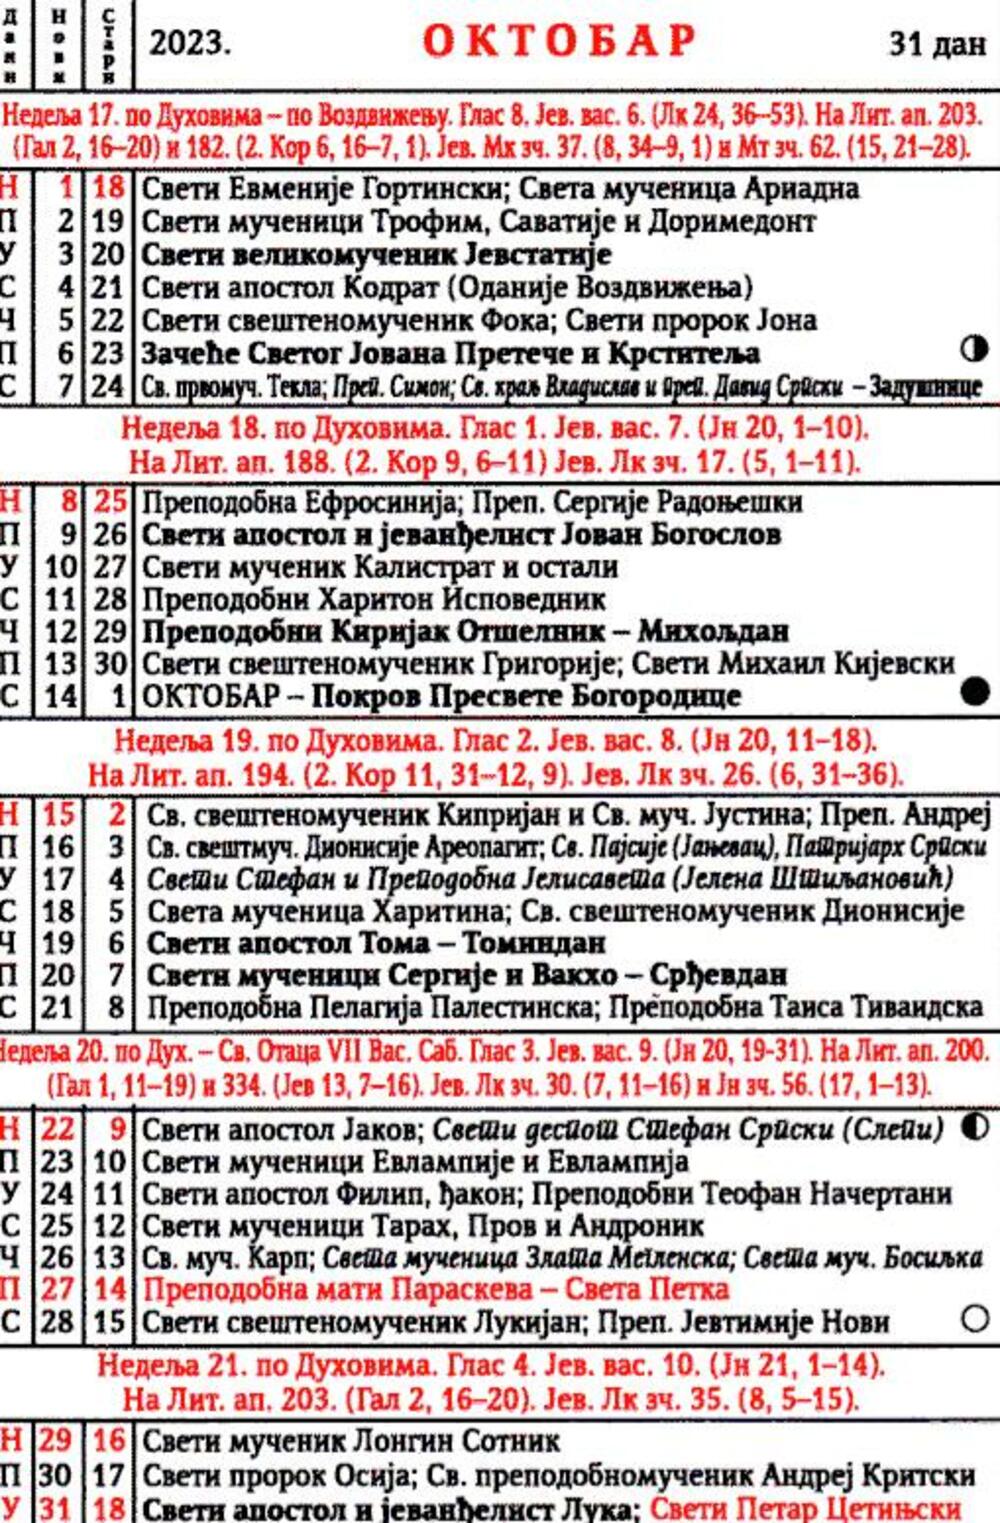 Pravoslavni kalendar oktobar 2023.